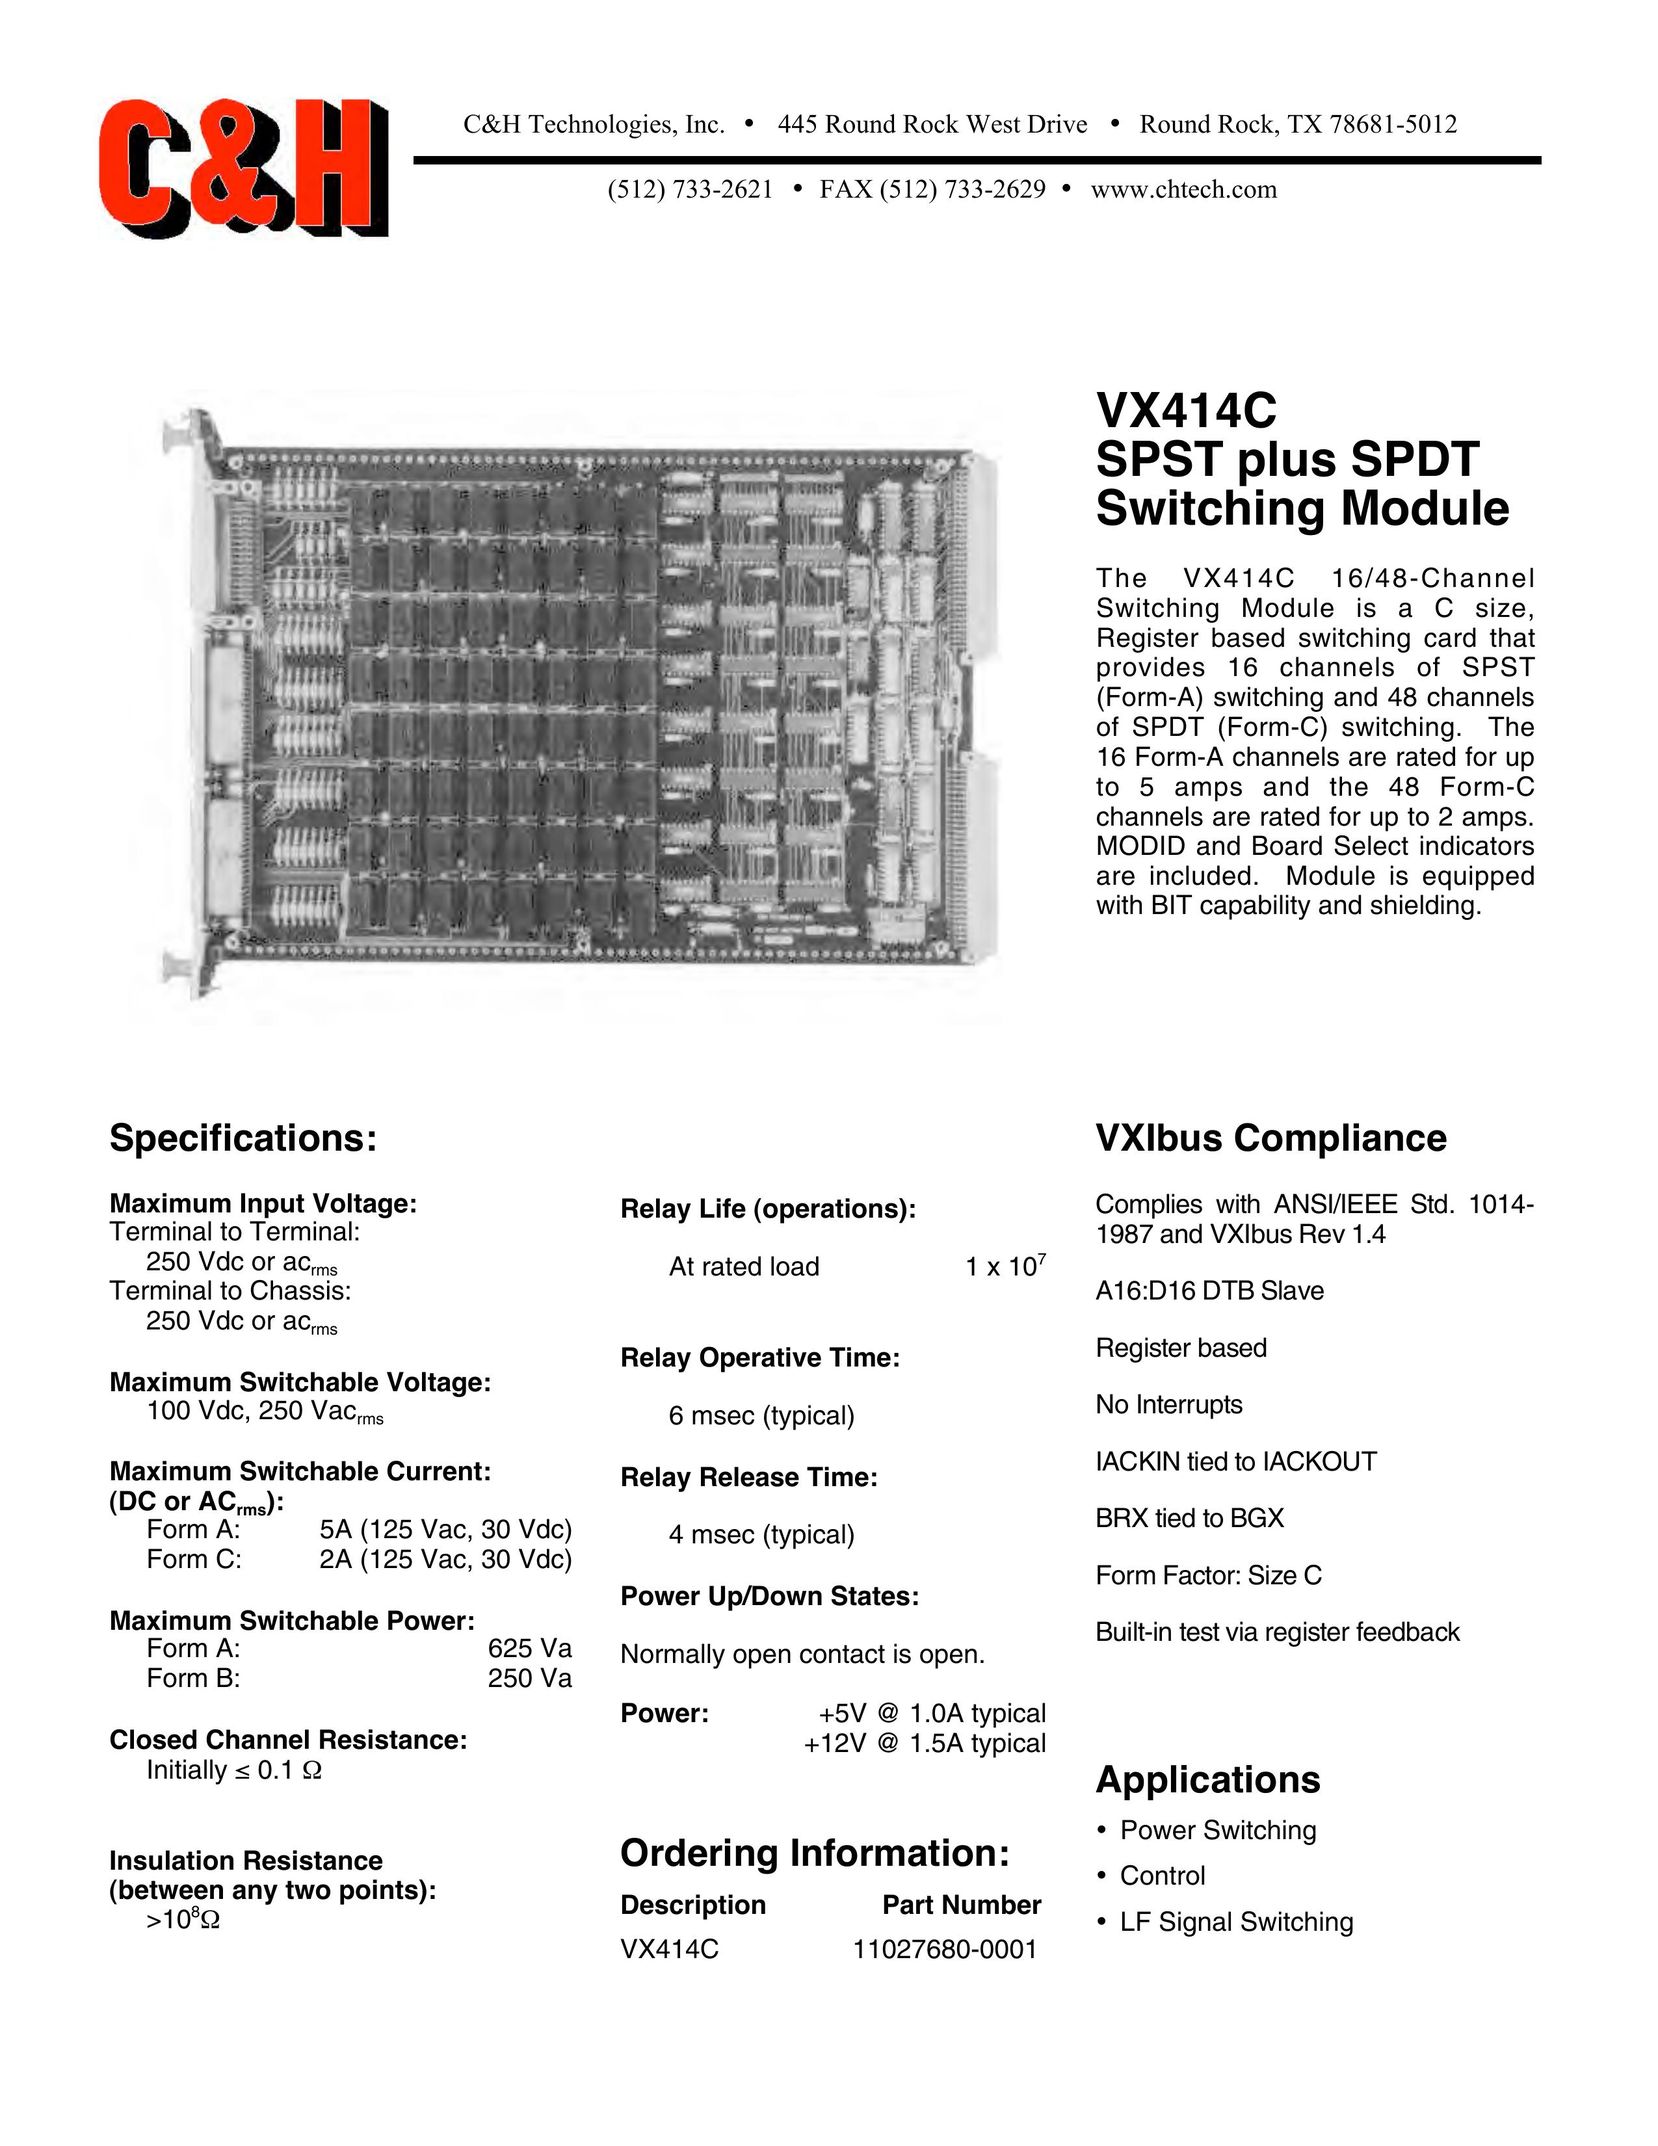 CH Tech VX414C Switch User Manual